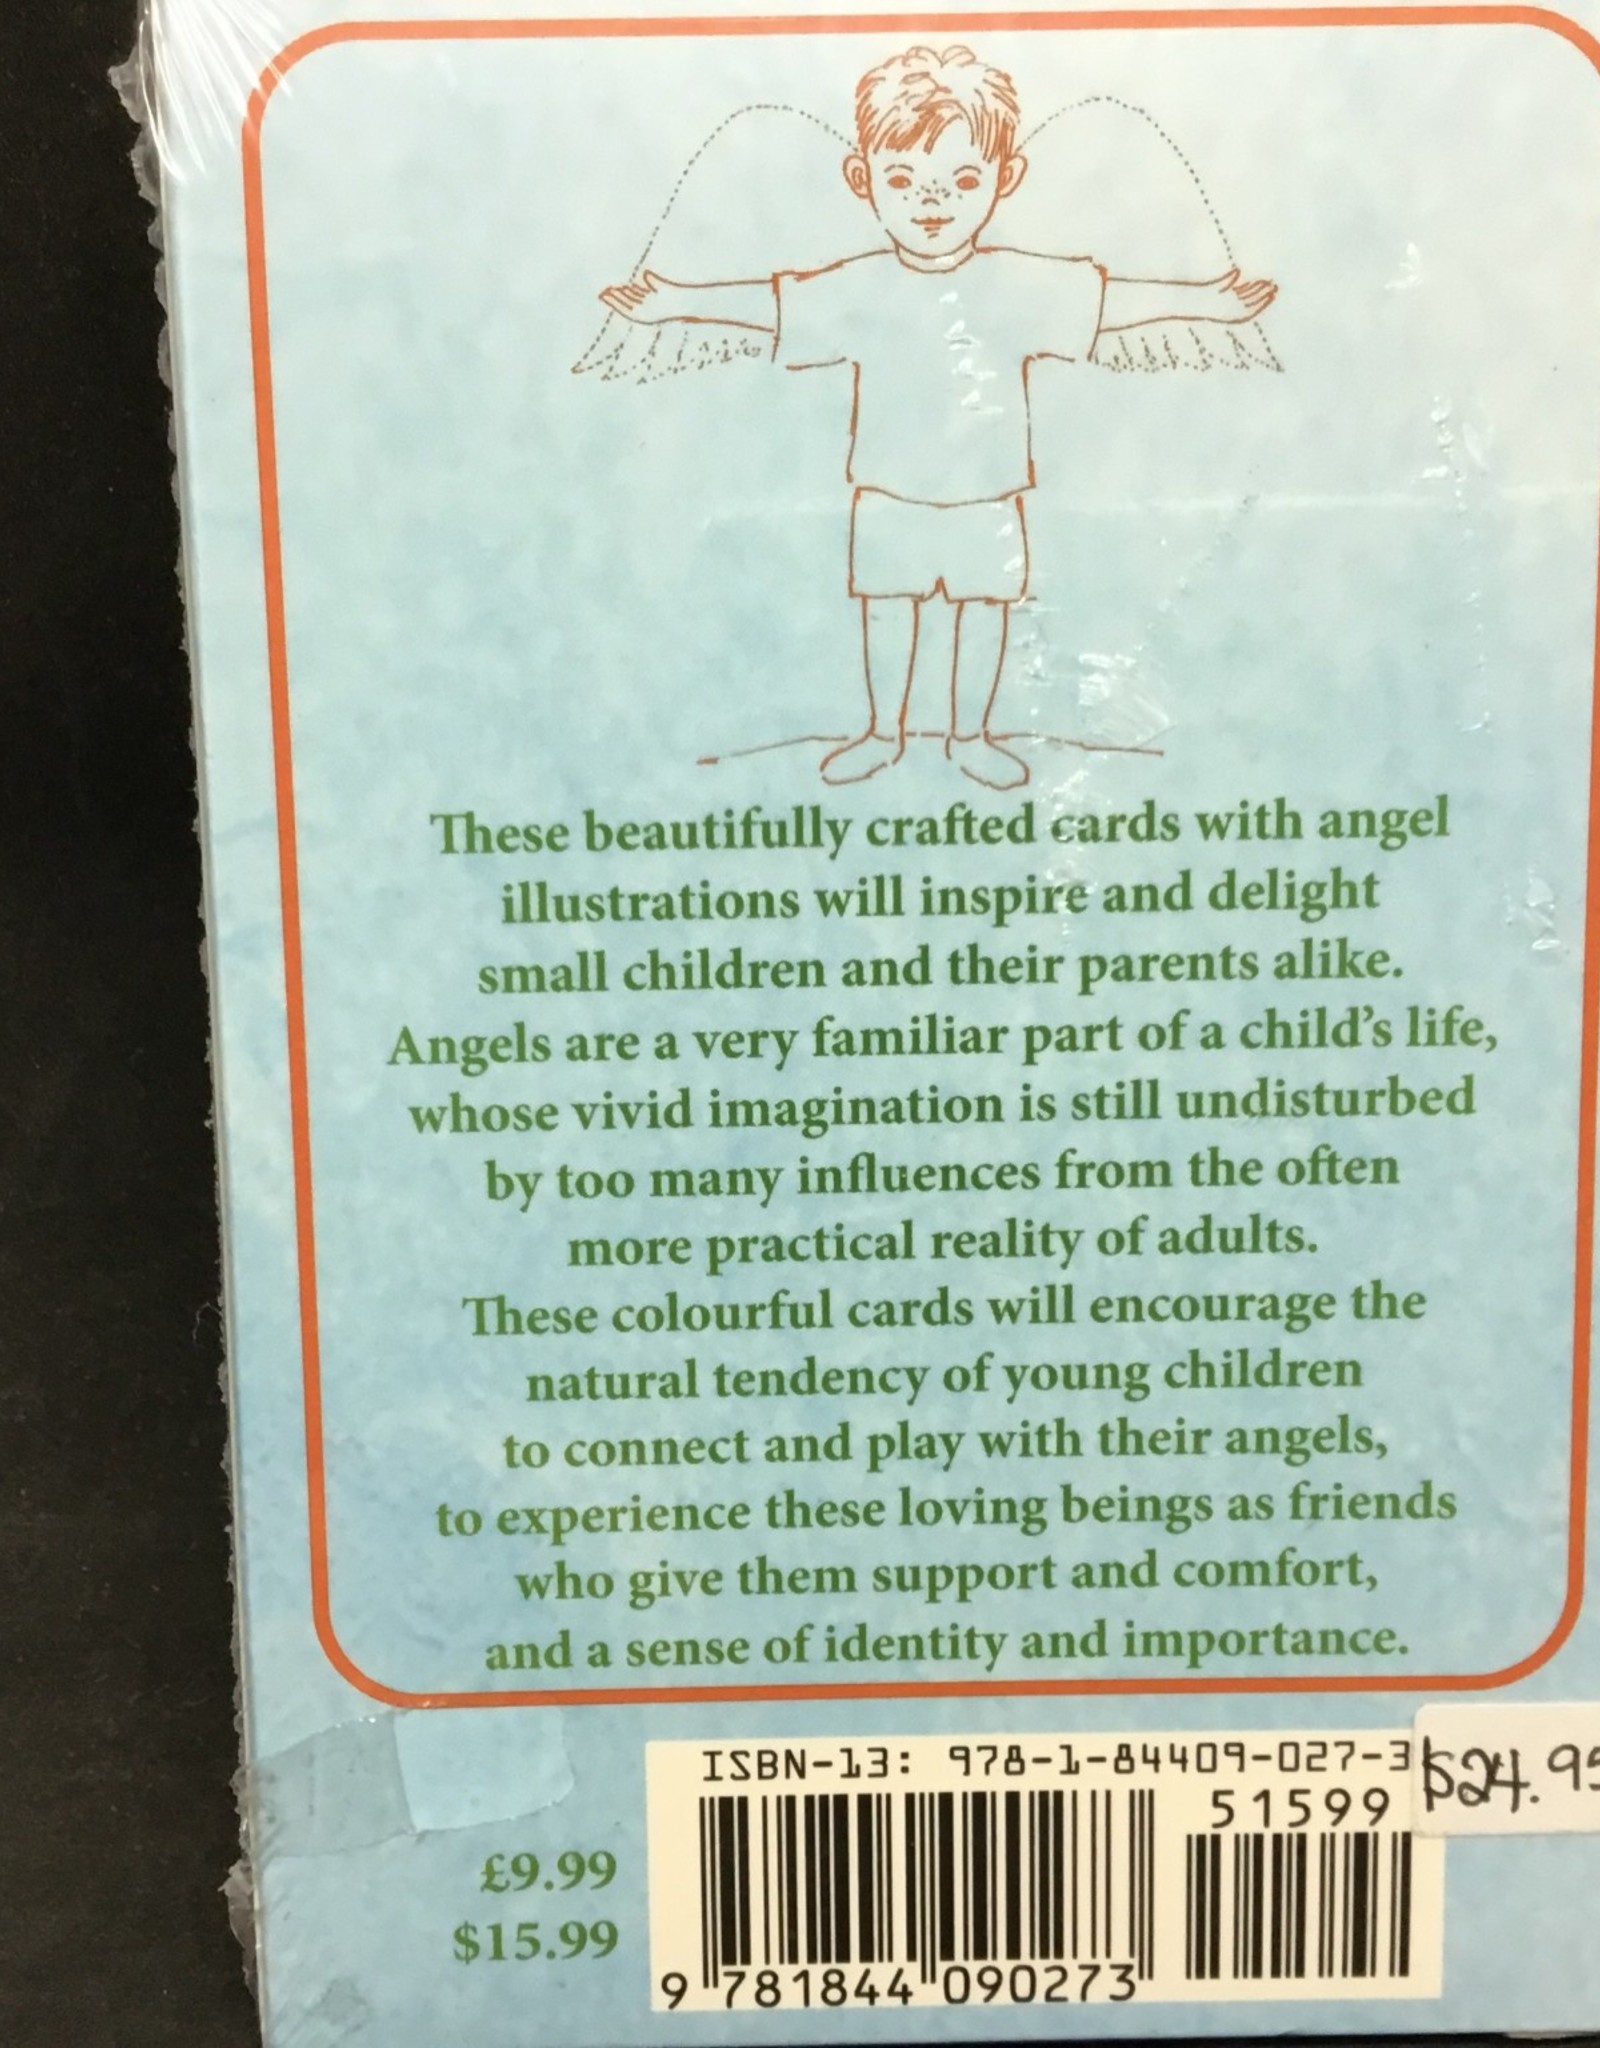 Angel cards for children